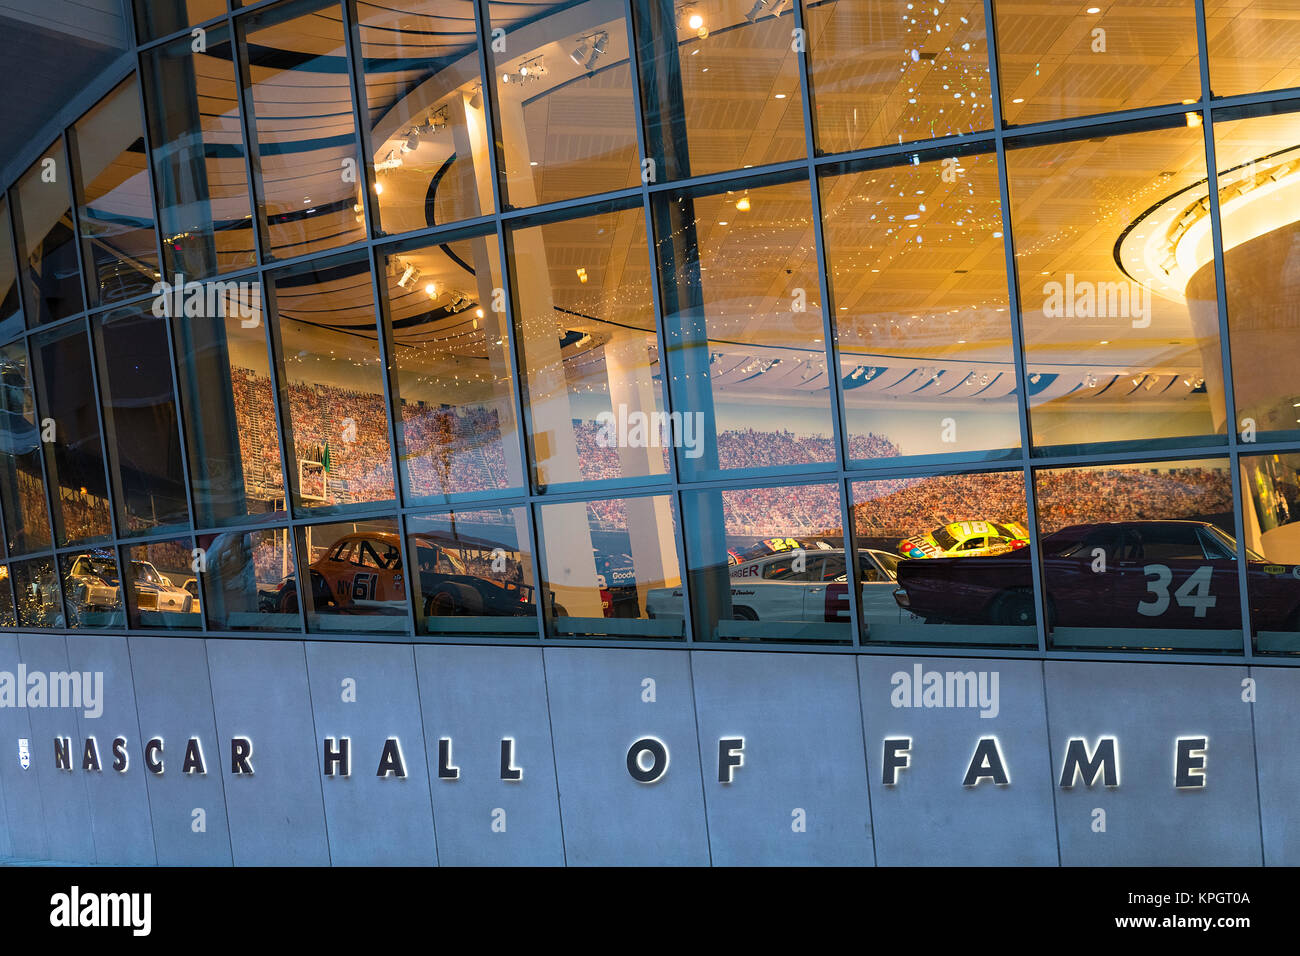 Nascar Hall of Fame, Charlotte, North Carolina, Stati Uniti d'America. Foto Stock